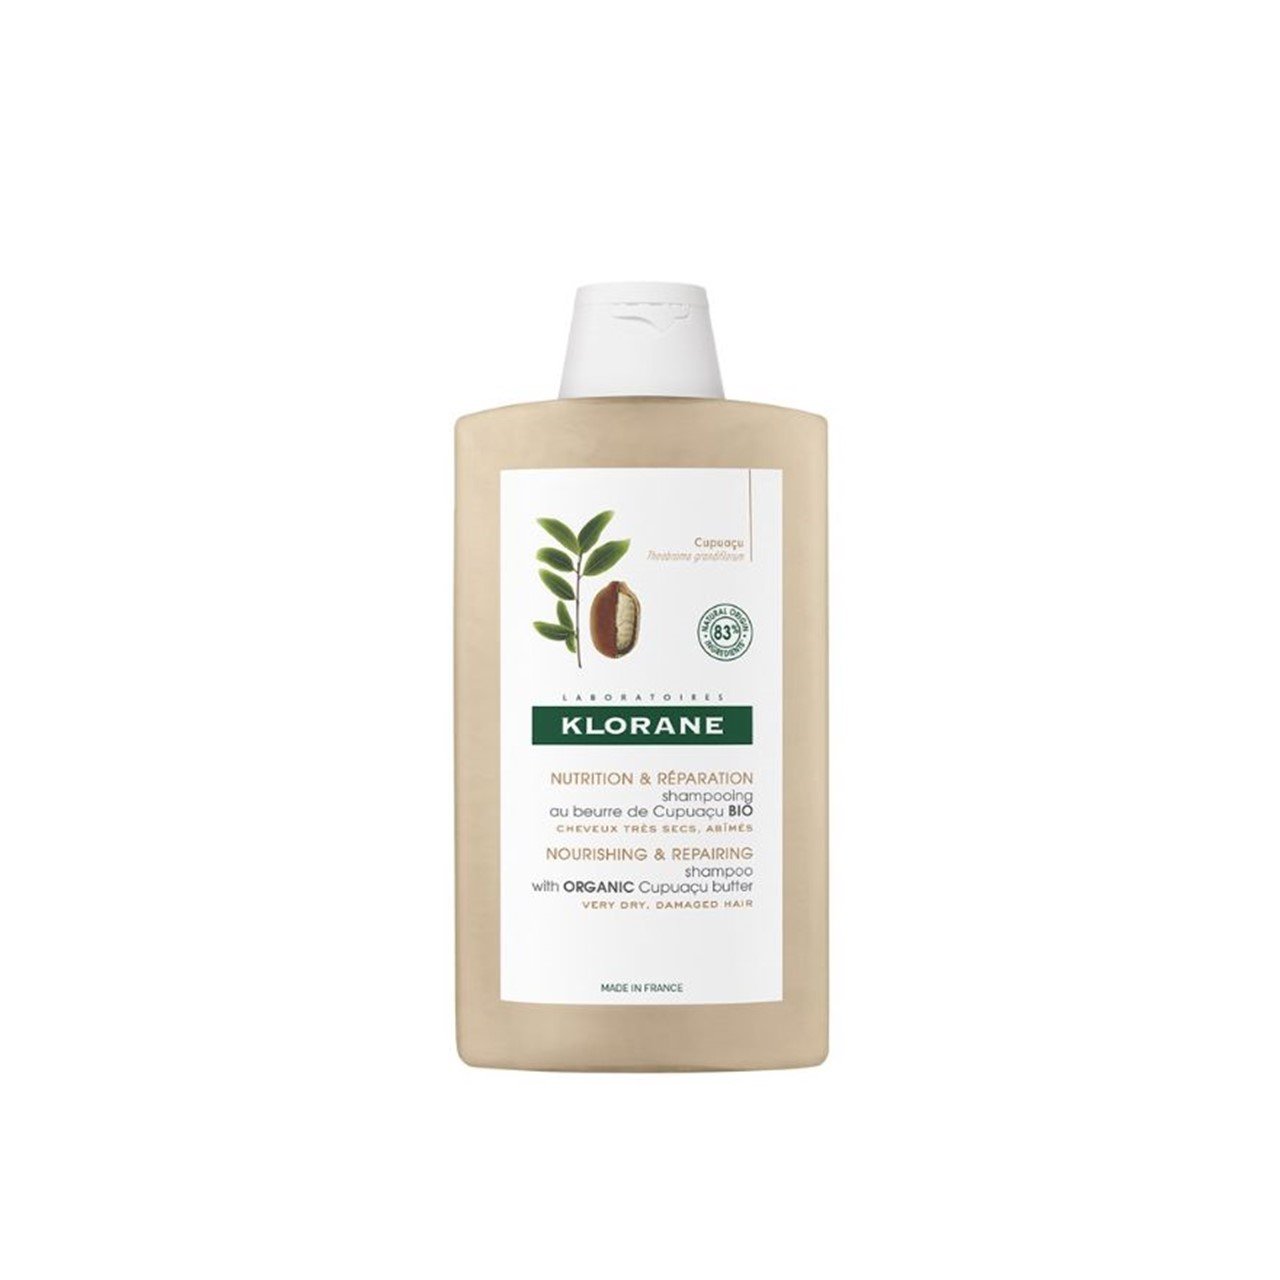 Klorane Nourishing & Repairing Organic Cupuaçu Butter Shampoo 200ml